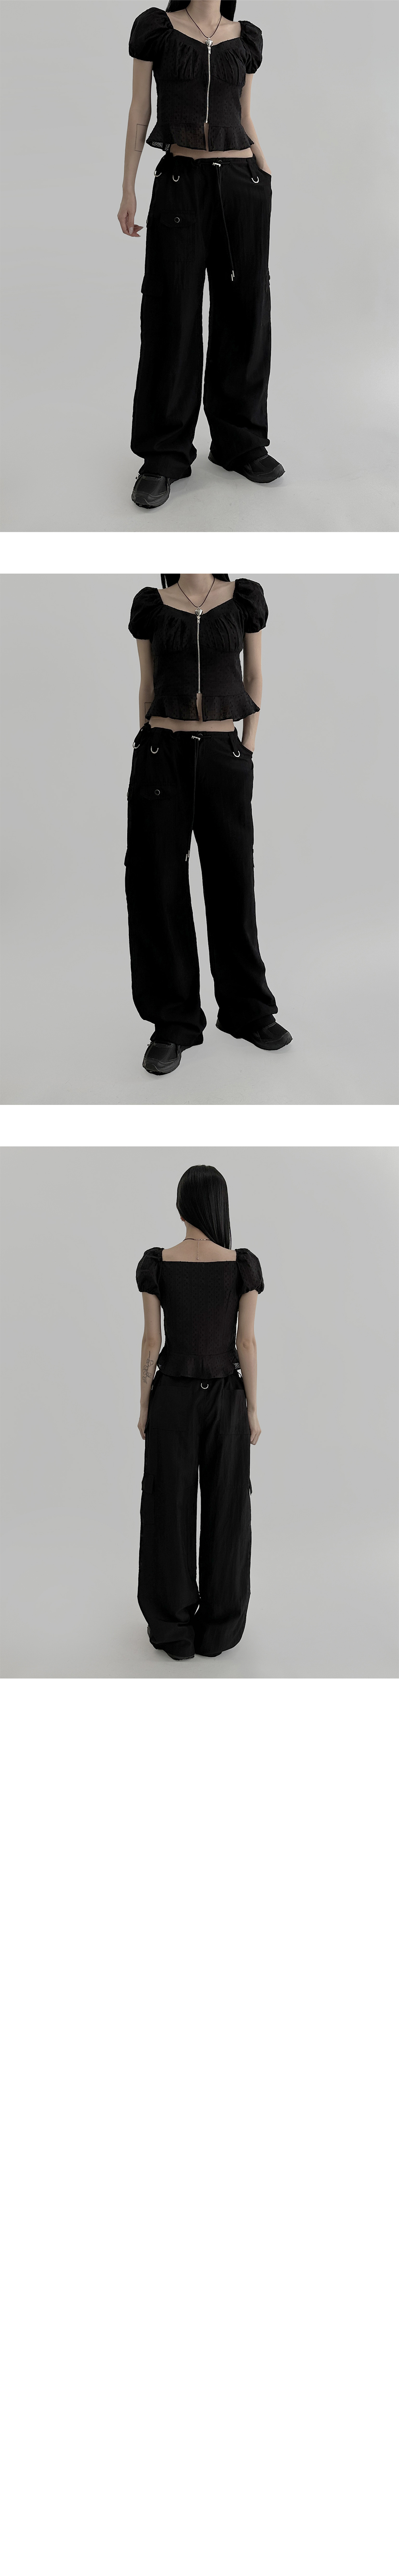 suspenders skirt/pants charcoal color image-S1L16